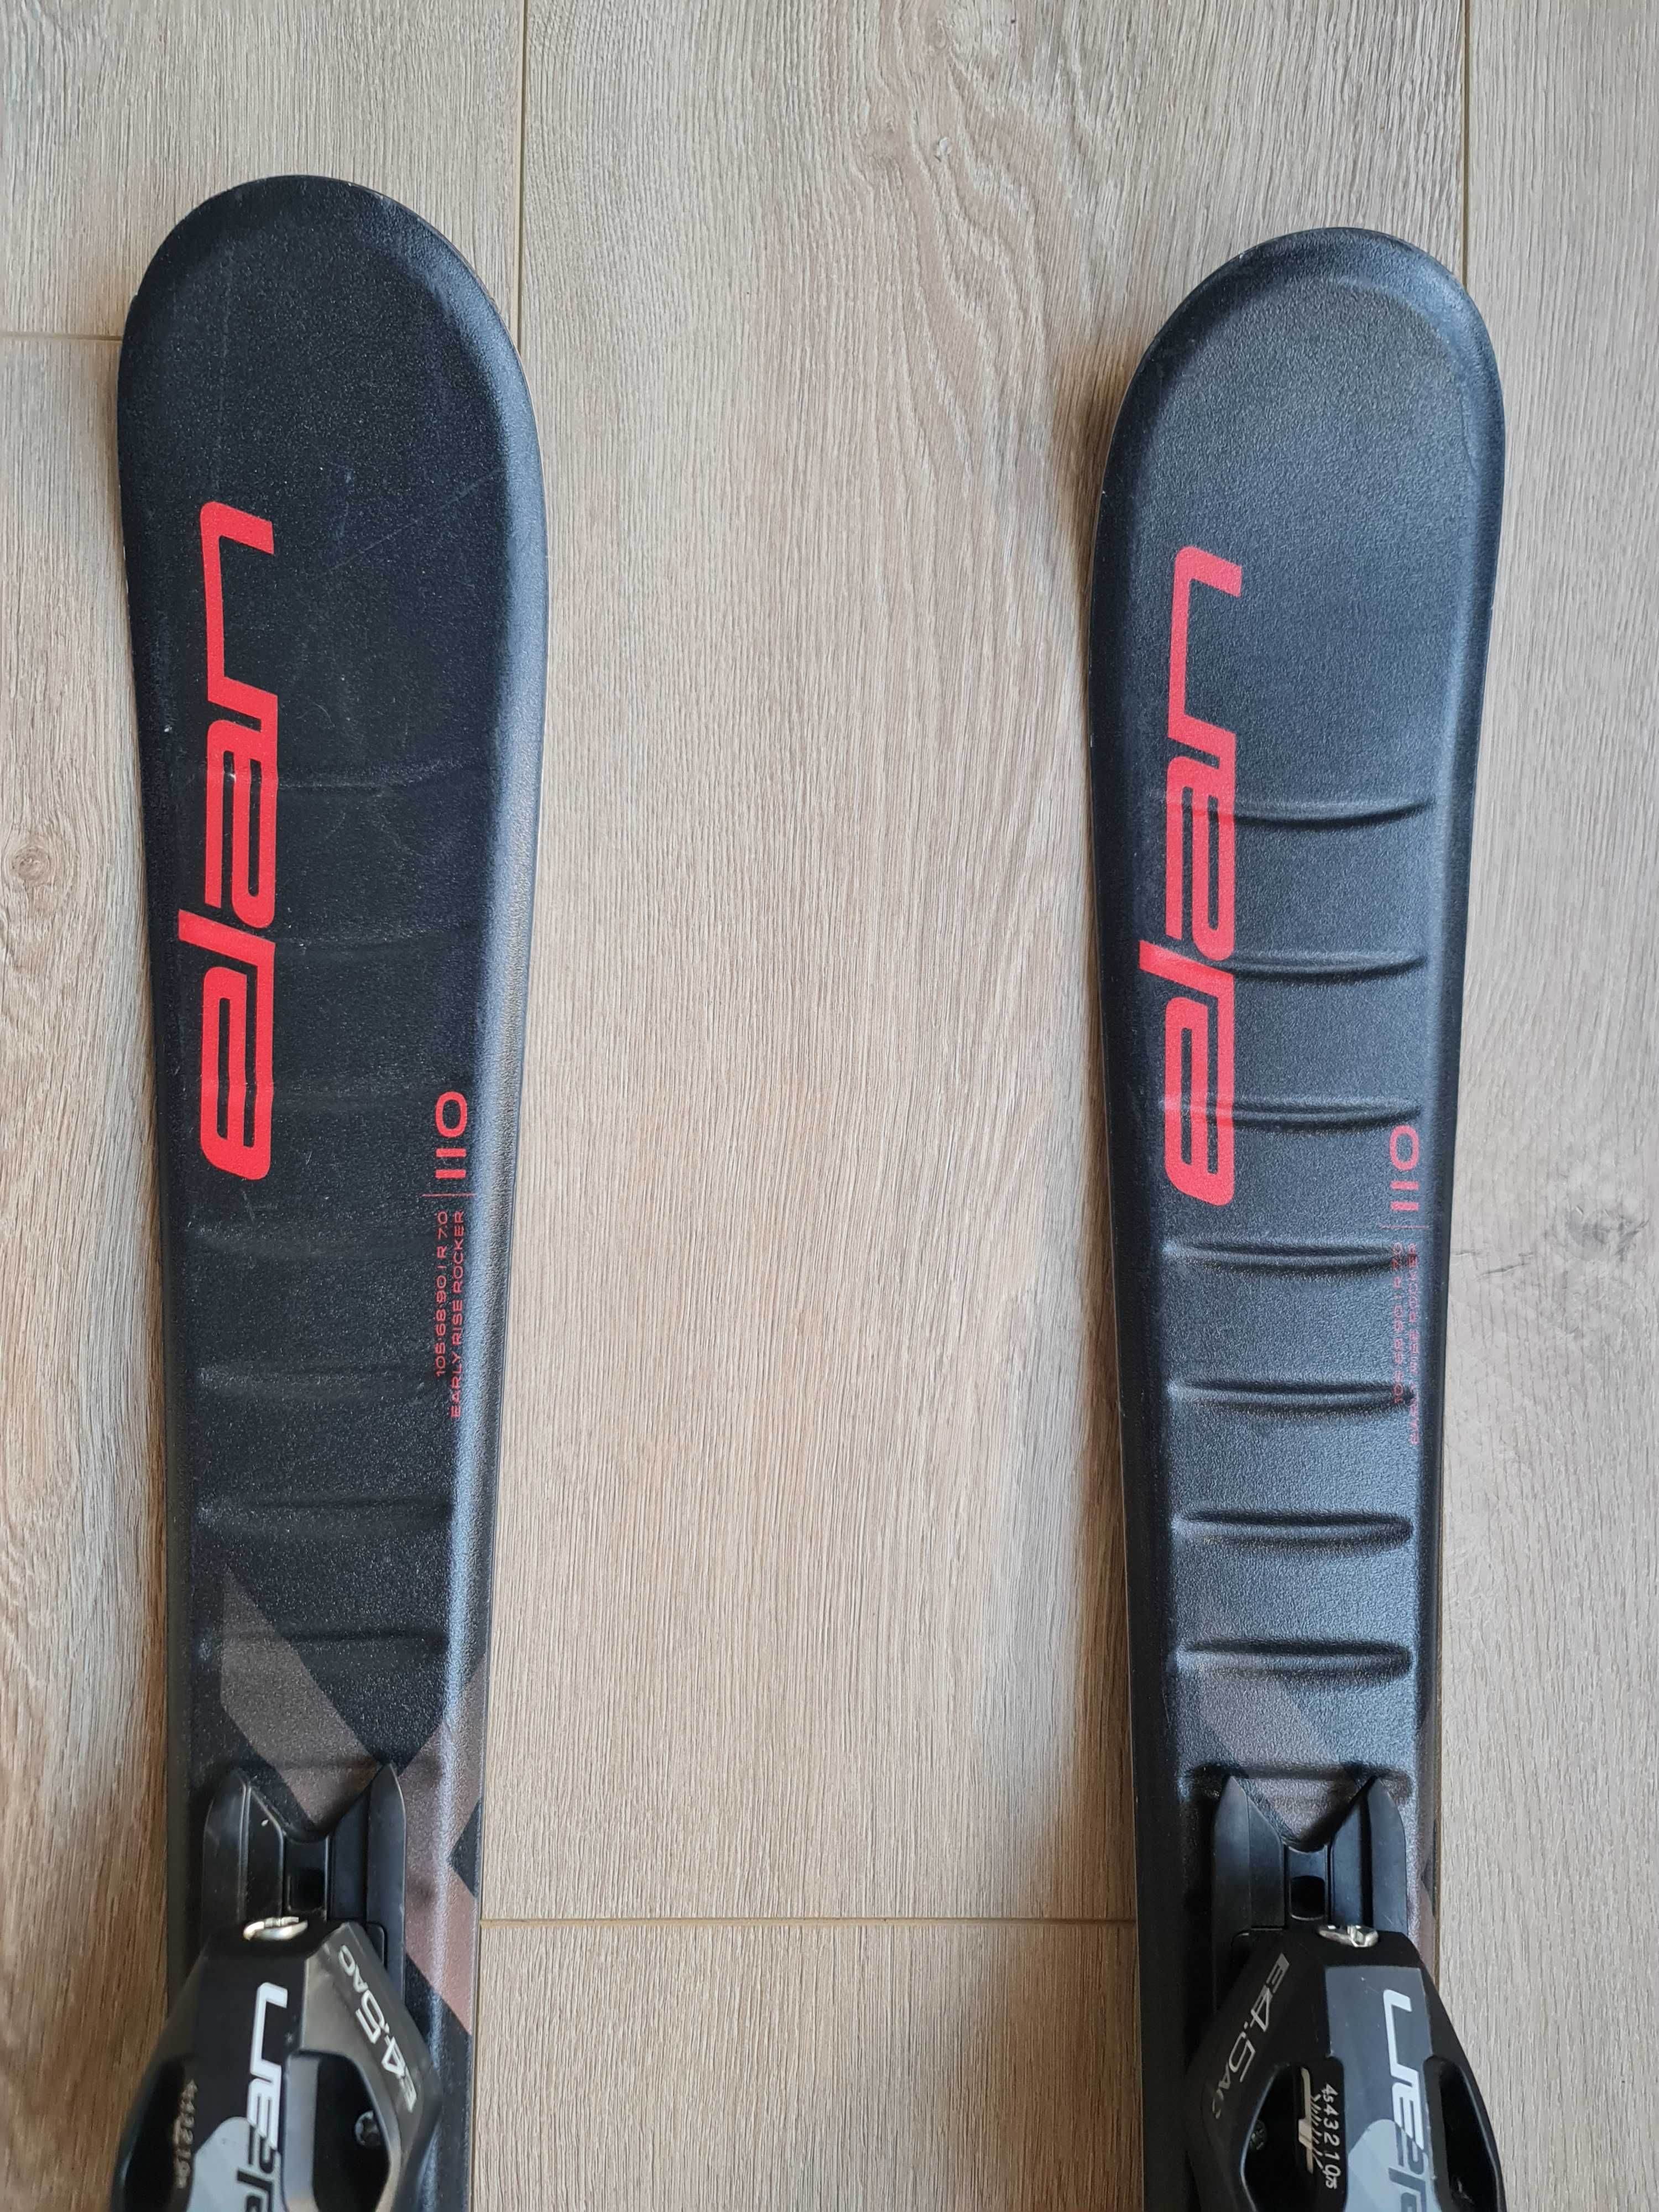 Schiuri Elan MAXX QS, cu legaturi model 4.5, copii, 110cm, negru/rosu